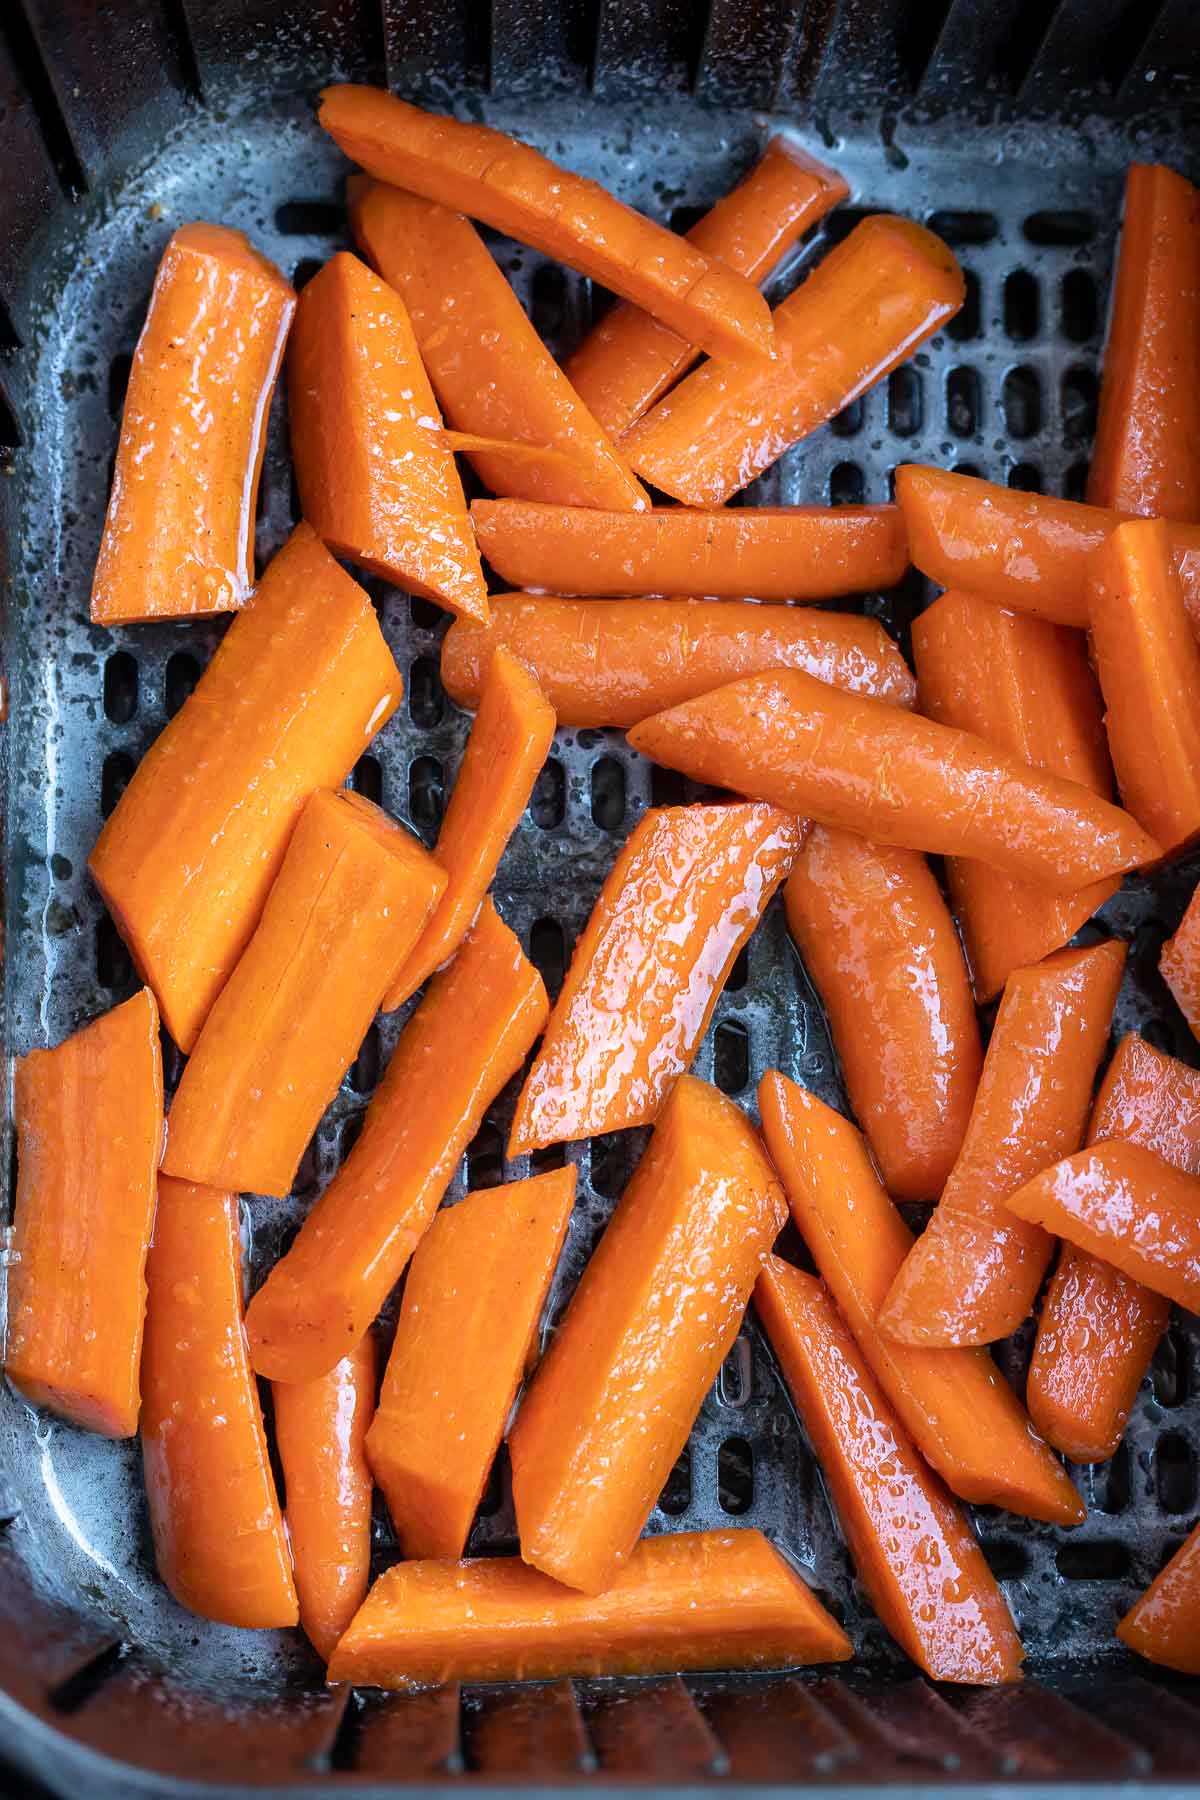 raw carrots in. air fryer basket